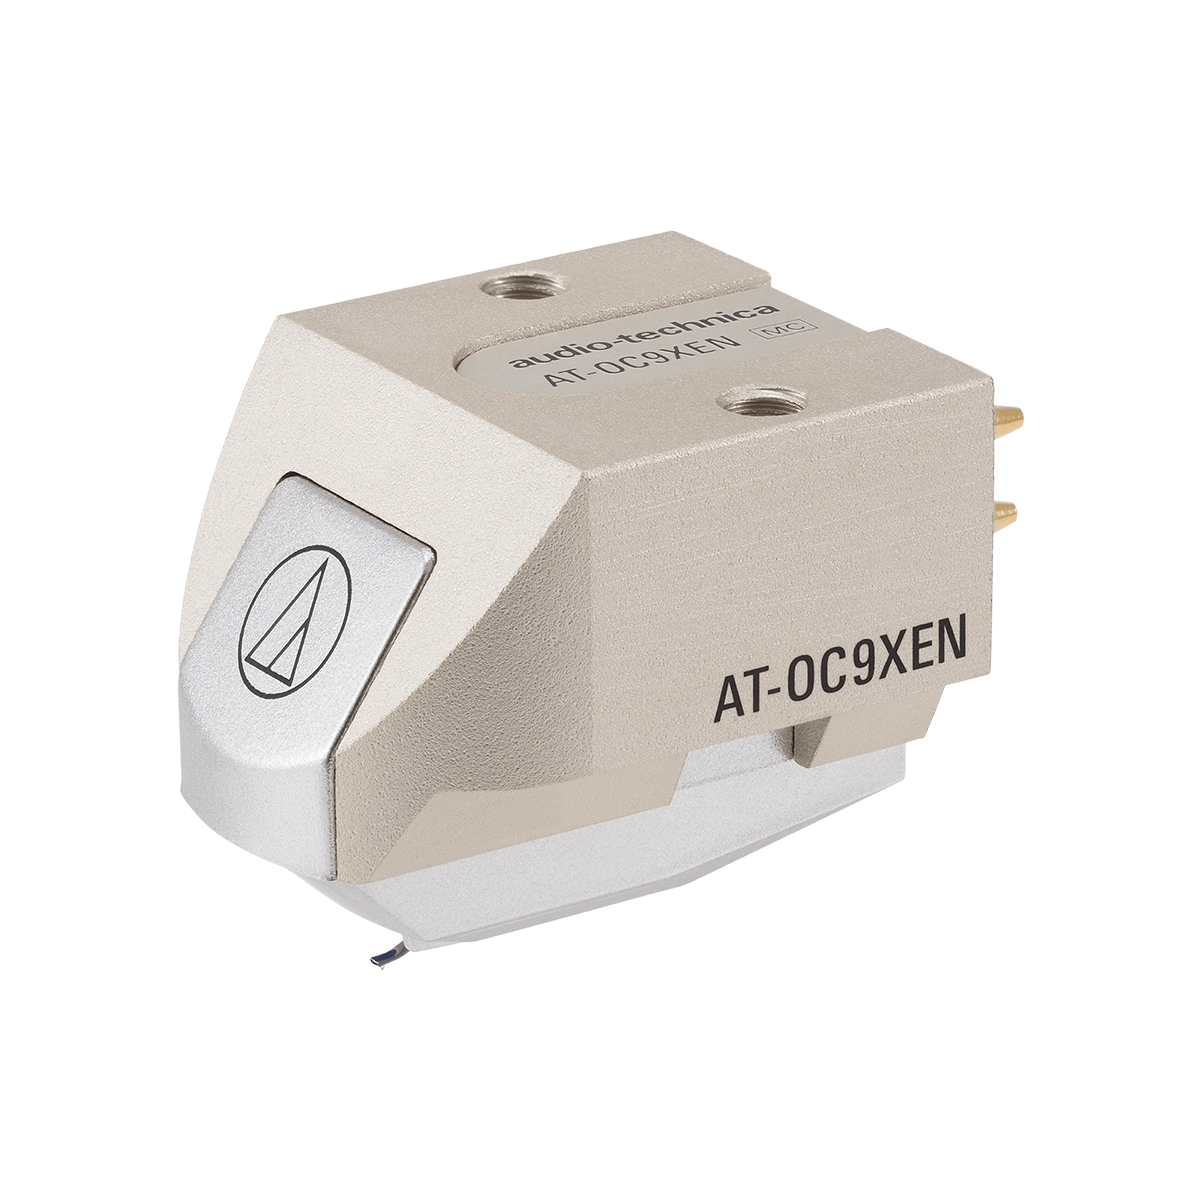 Audio-Technica AT-OC9XEN Moving Coil Cartridge